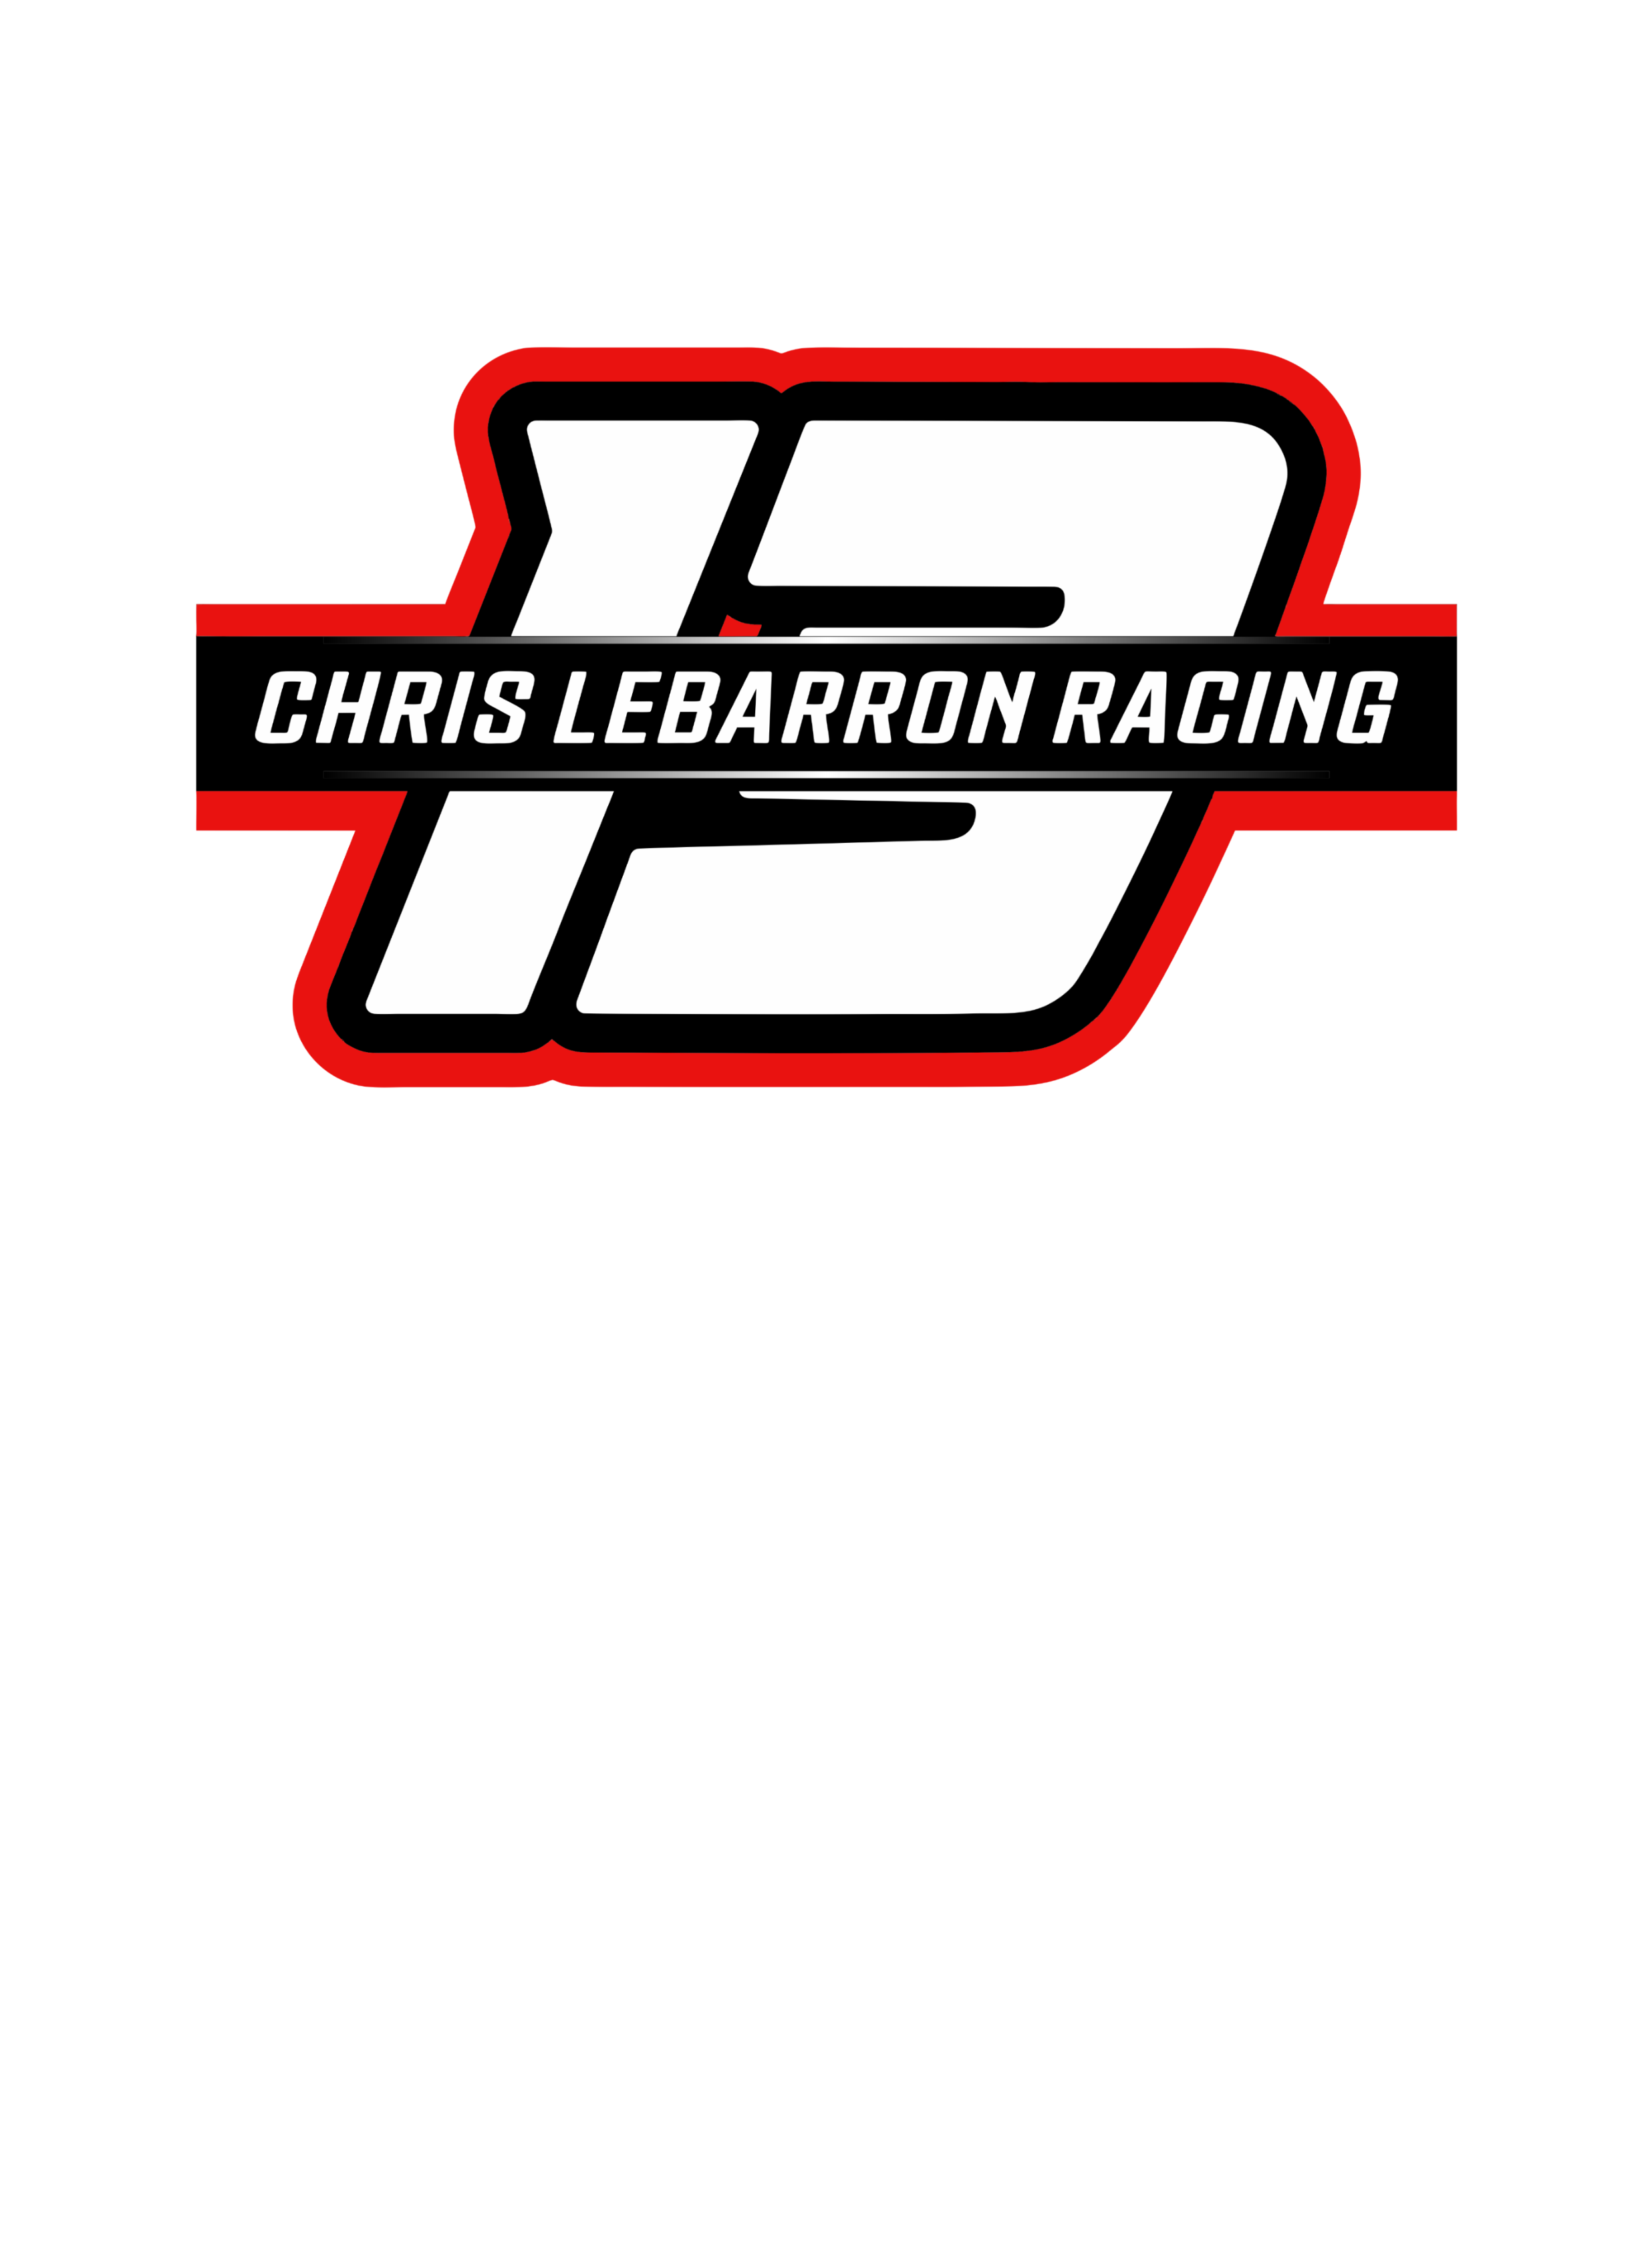 Chris LeBarron Racing Men's T-Shirt (S-XL)